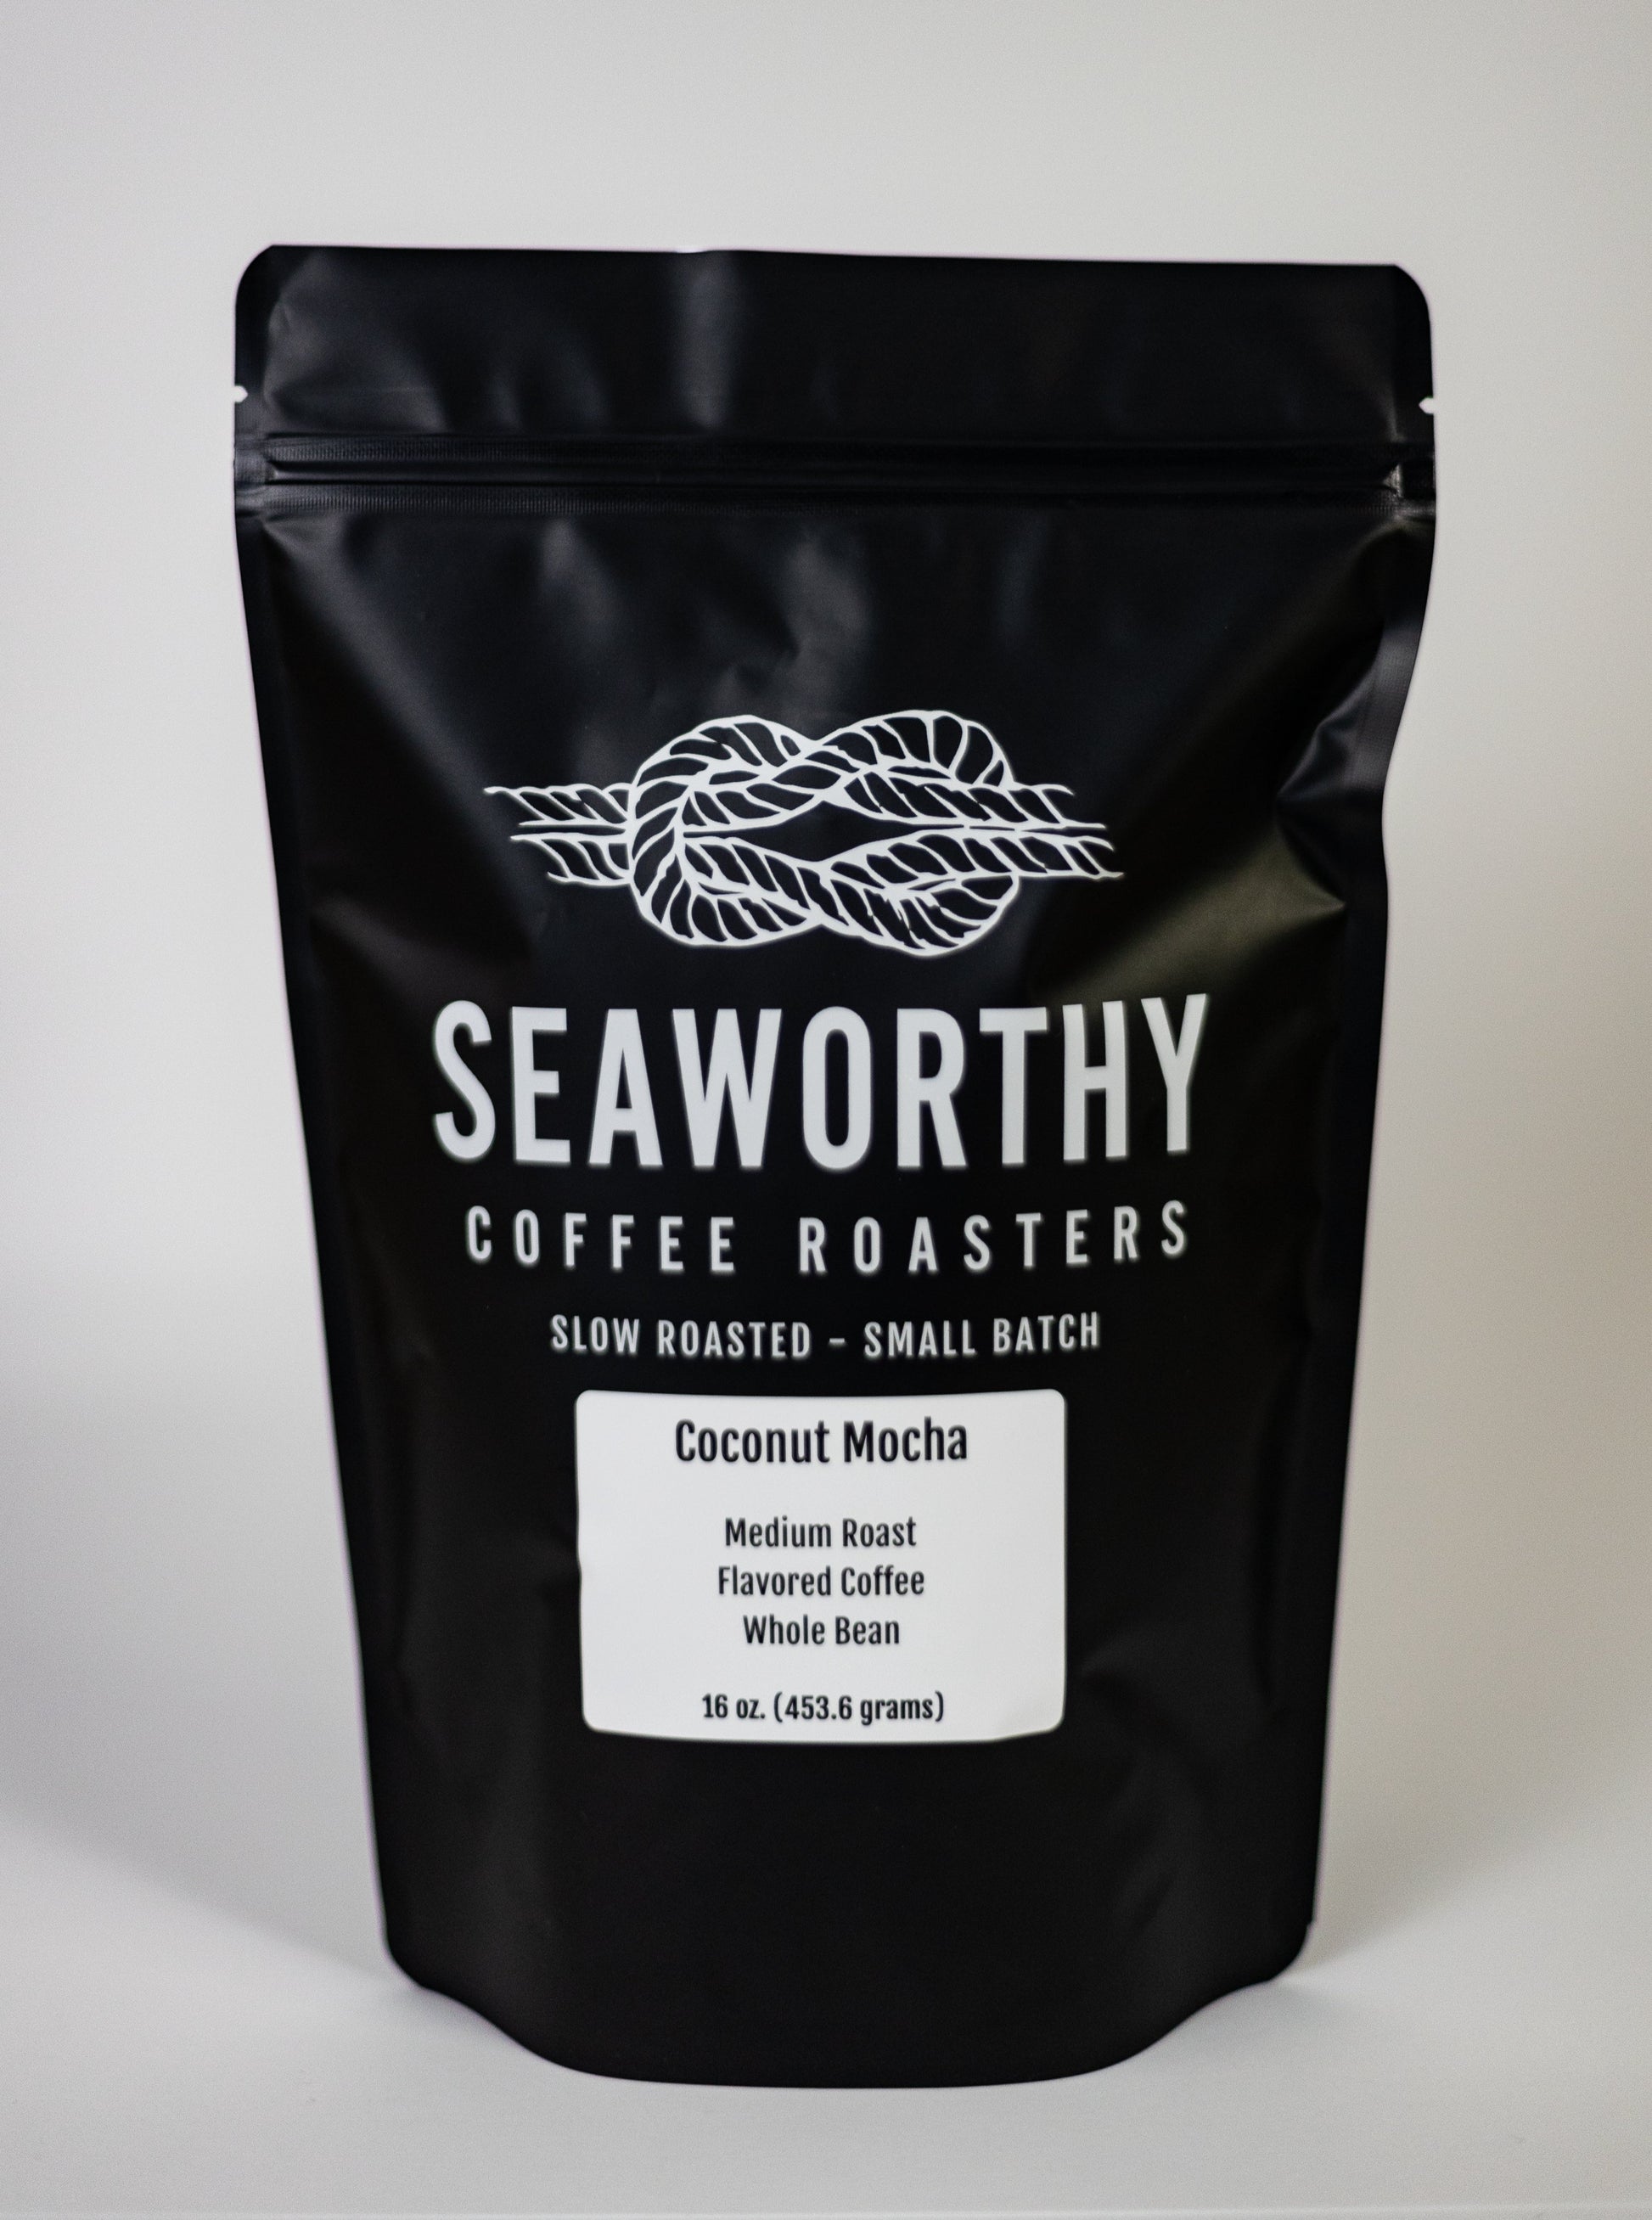 Seaworthy slow roasted, small batch, low acid coffee. 1 pound bag of Coconut Mocha flavored coffee.